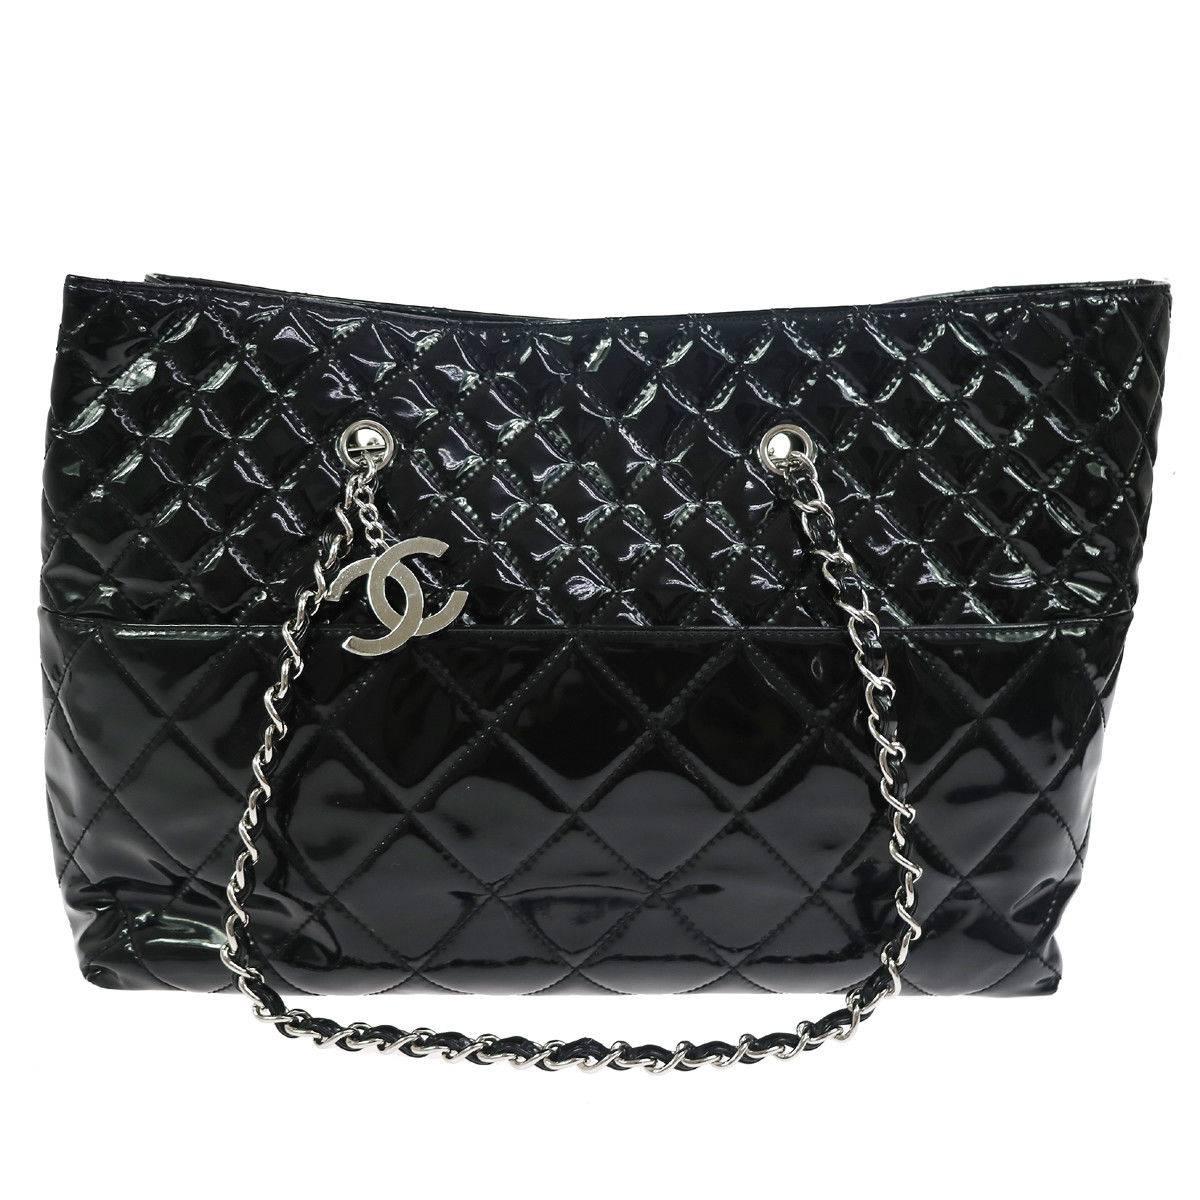 Chanel Black Patent Silver Large Carryall Travel Shopper Bag